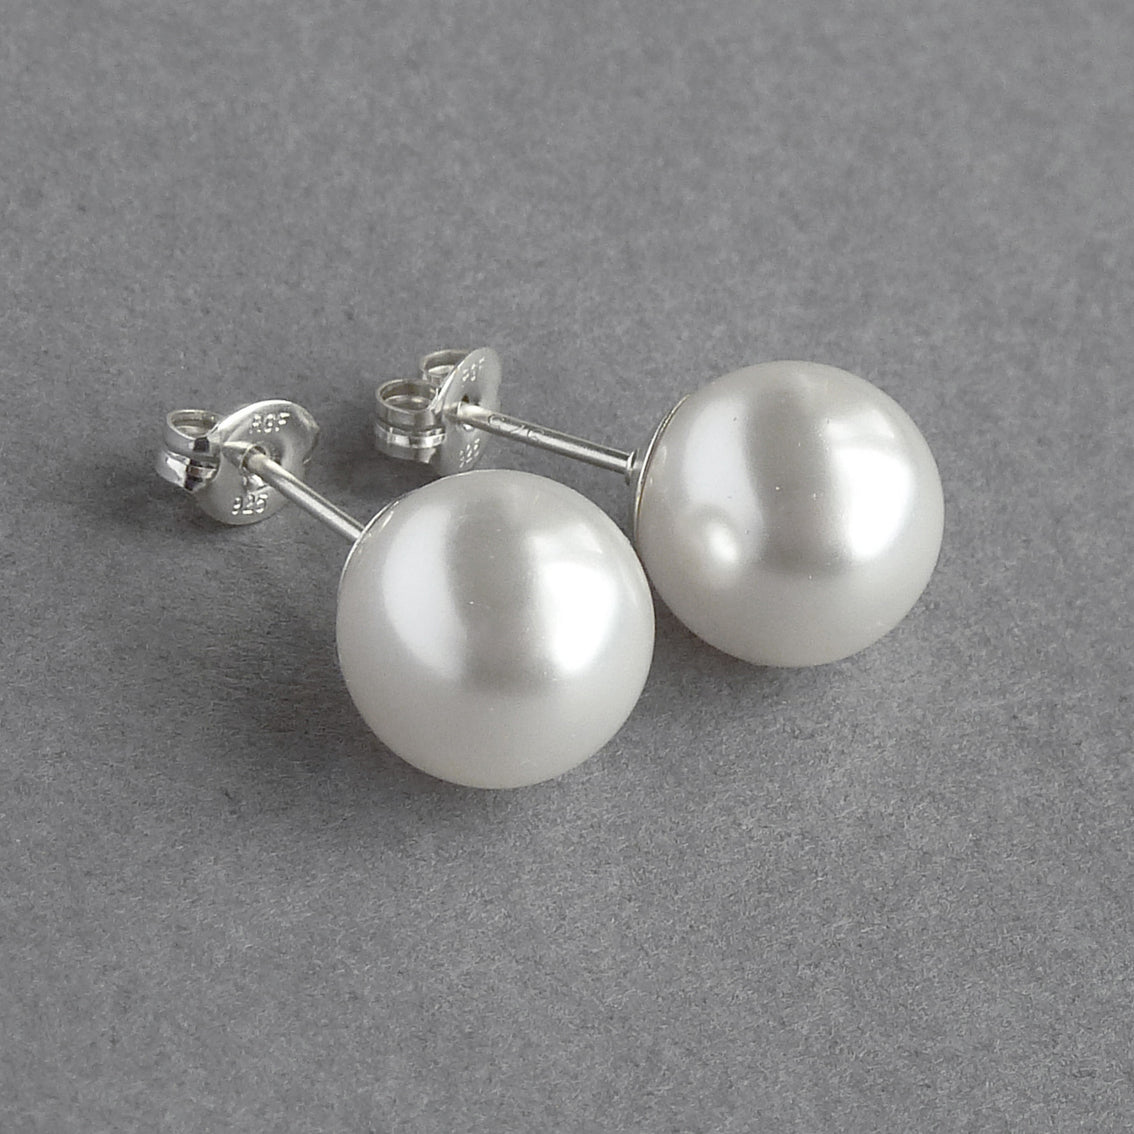 Chunky white pearl stud earrings